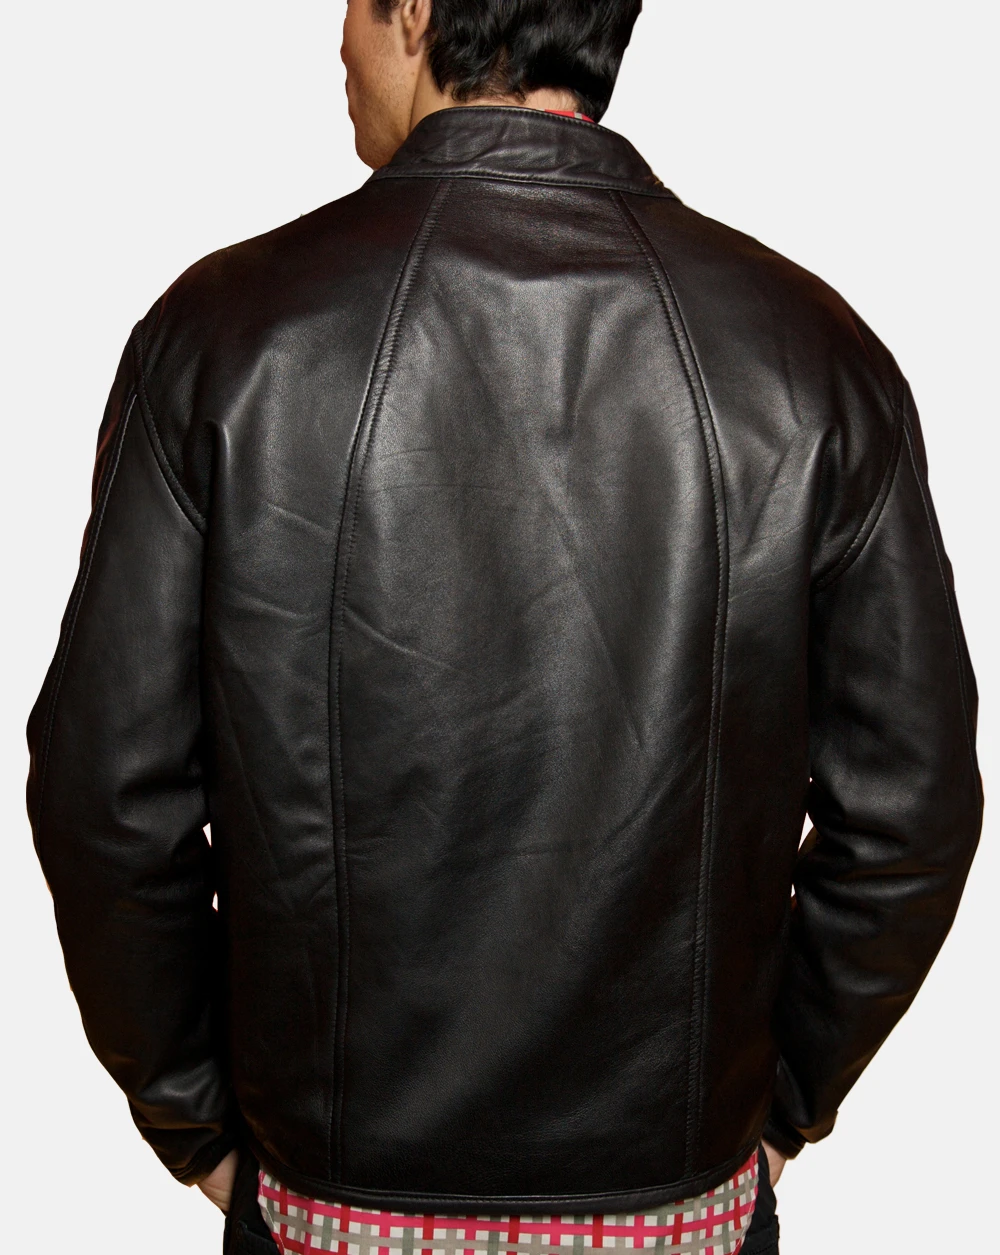 Real leather moto jacket